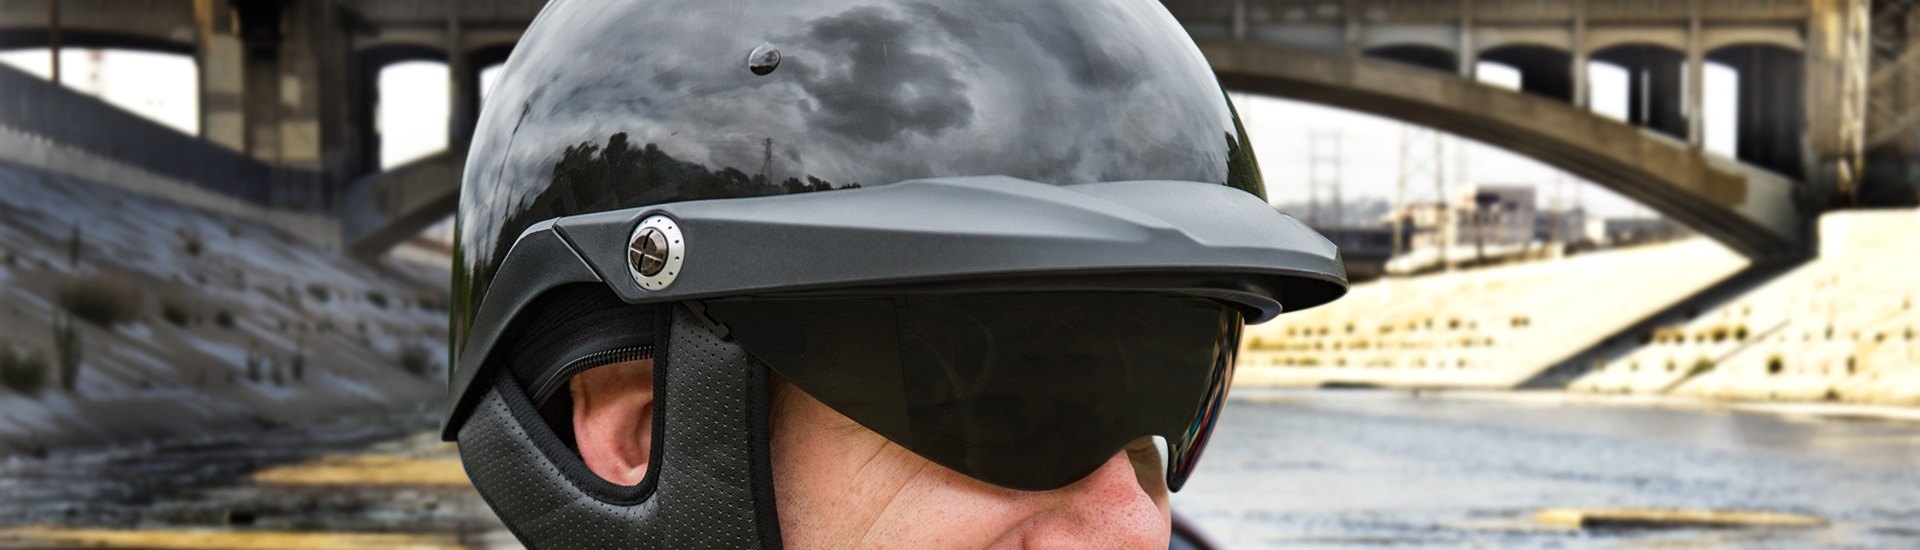 Motorcycle Half Shell Helmets